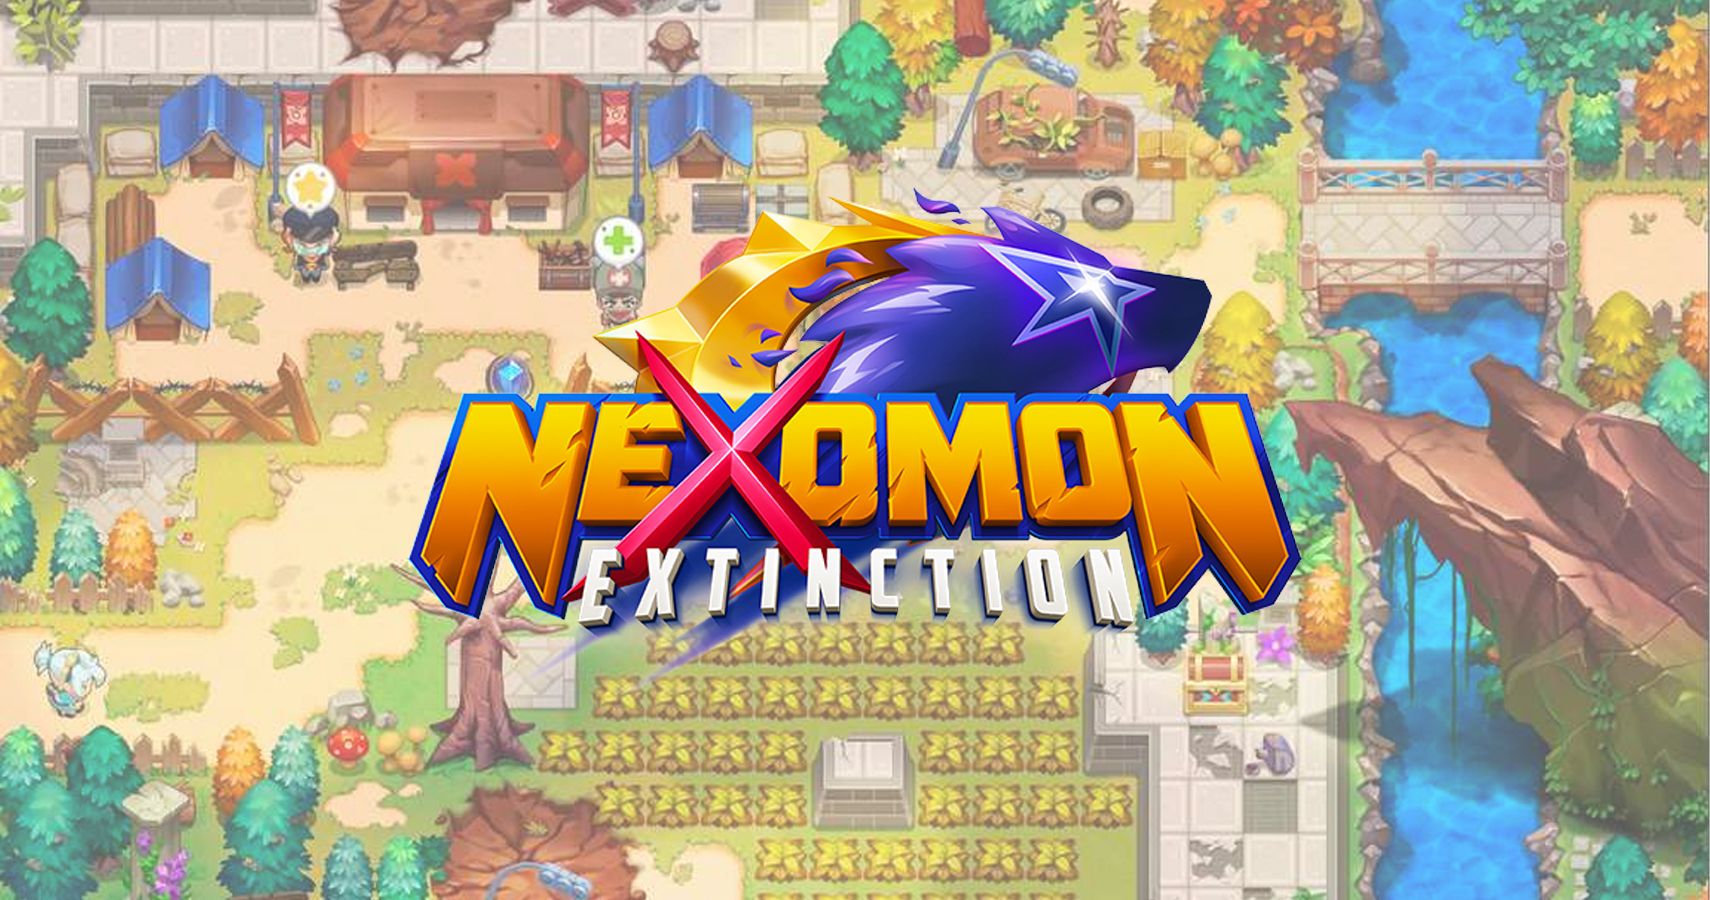 nexomon extinction character creation